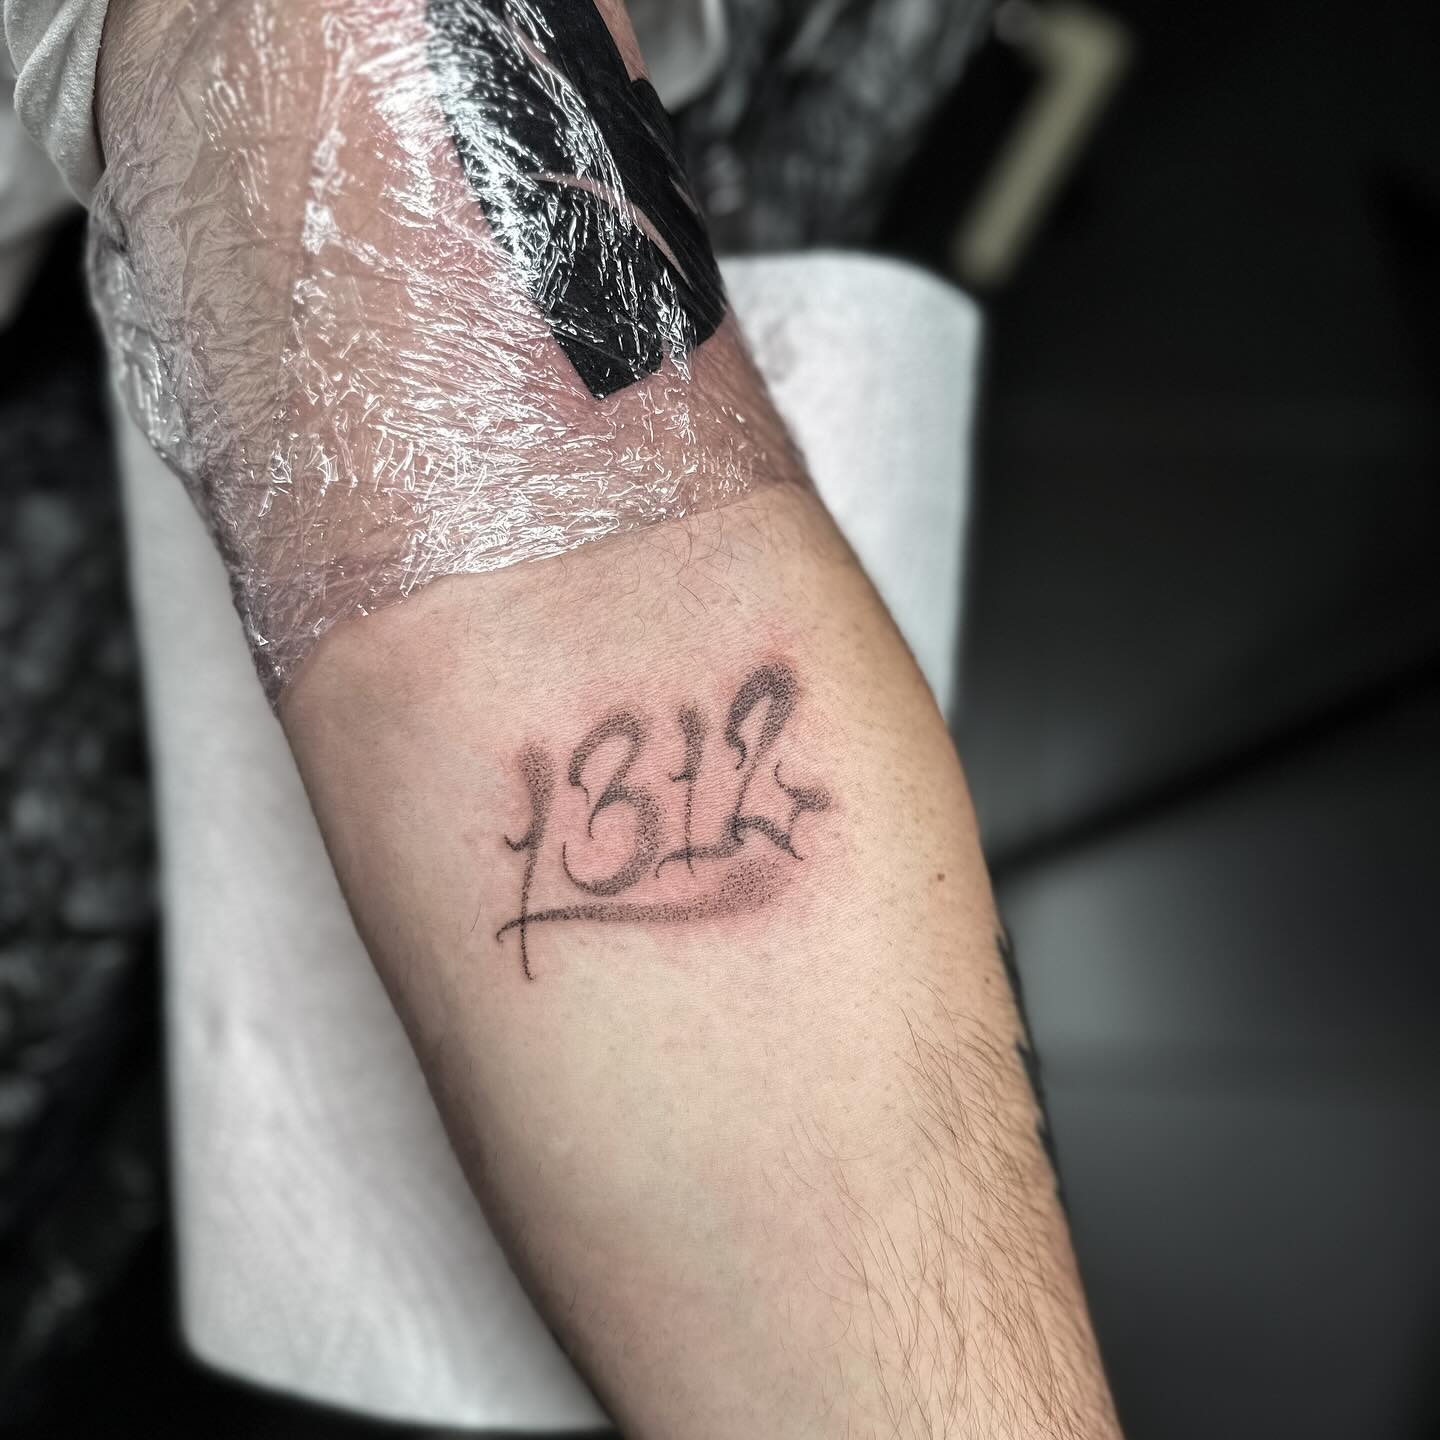 DANKE FLO! 
.
#1312 #tattoo #letteringtattoo #handlettering #dotwork #zeitgeistt